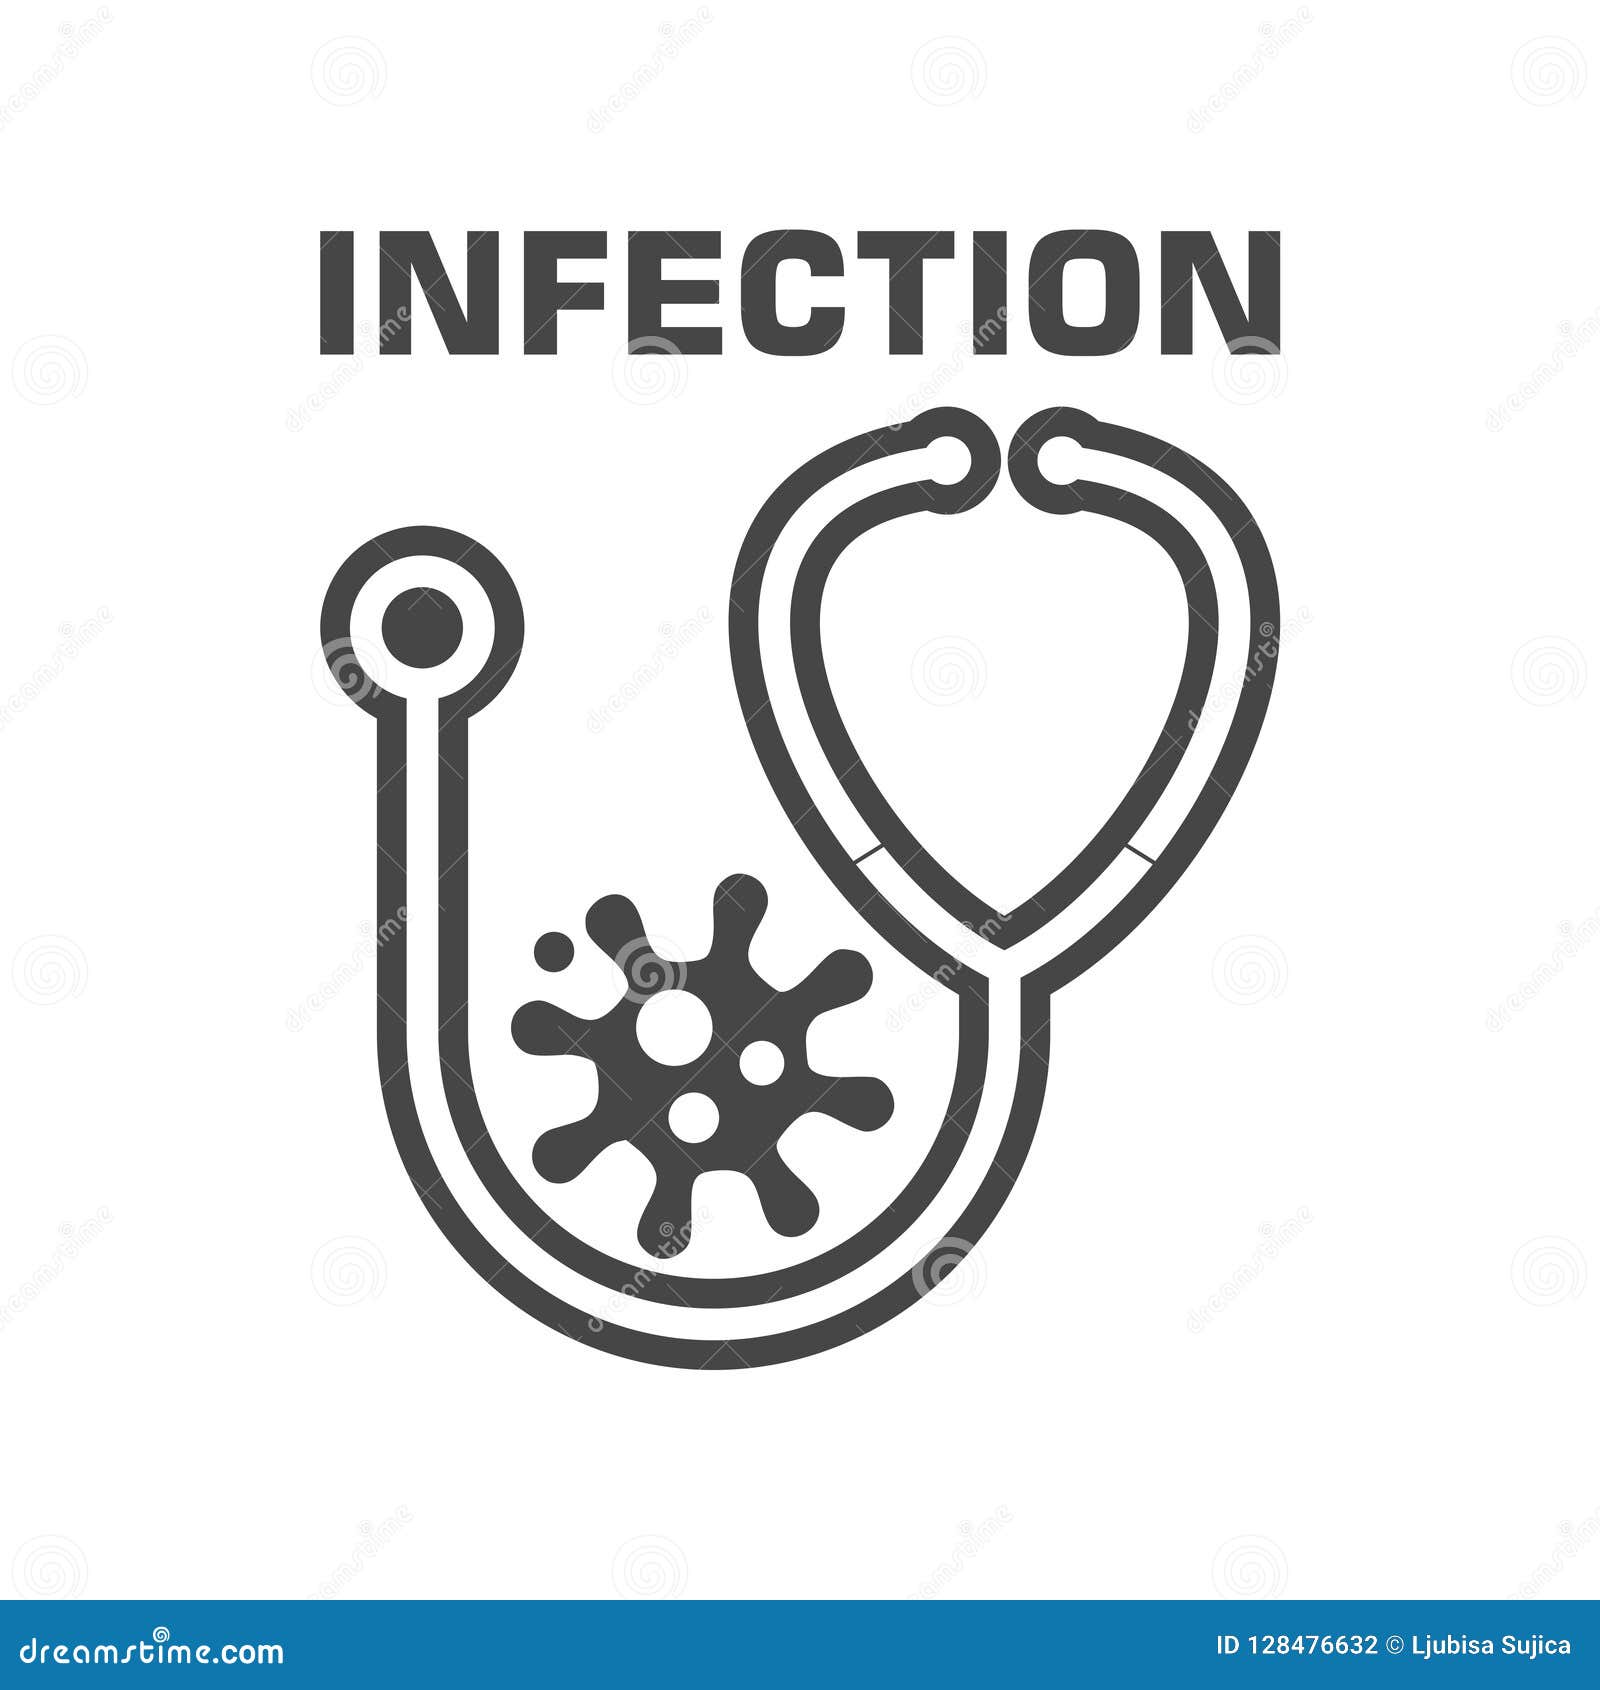 infection icon, stethoscope icon